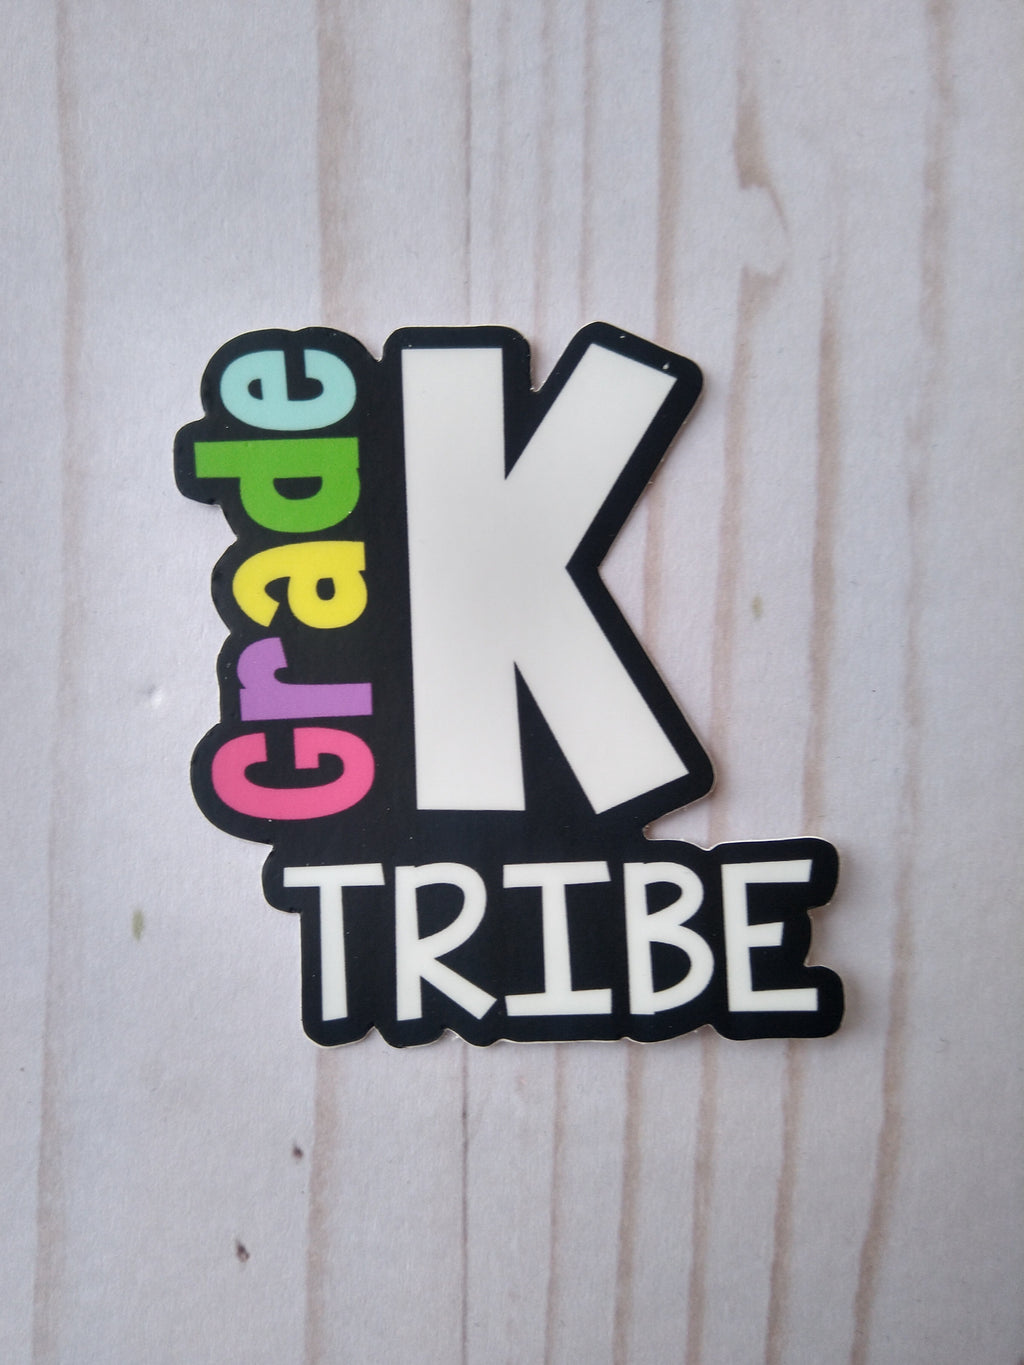 Grade K tribe